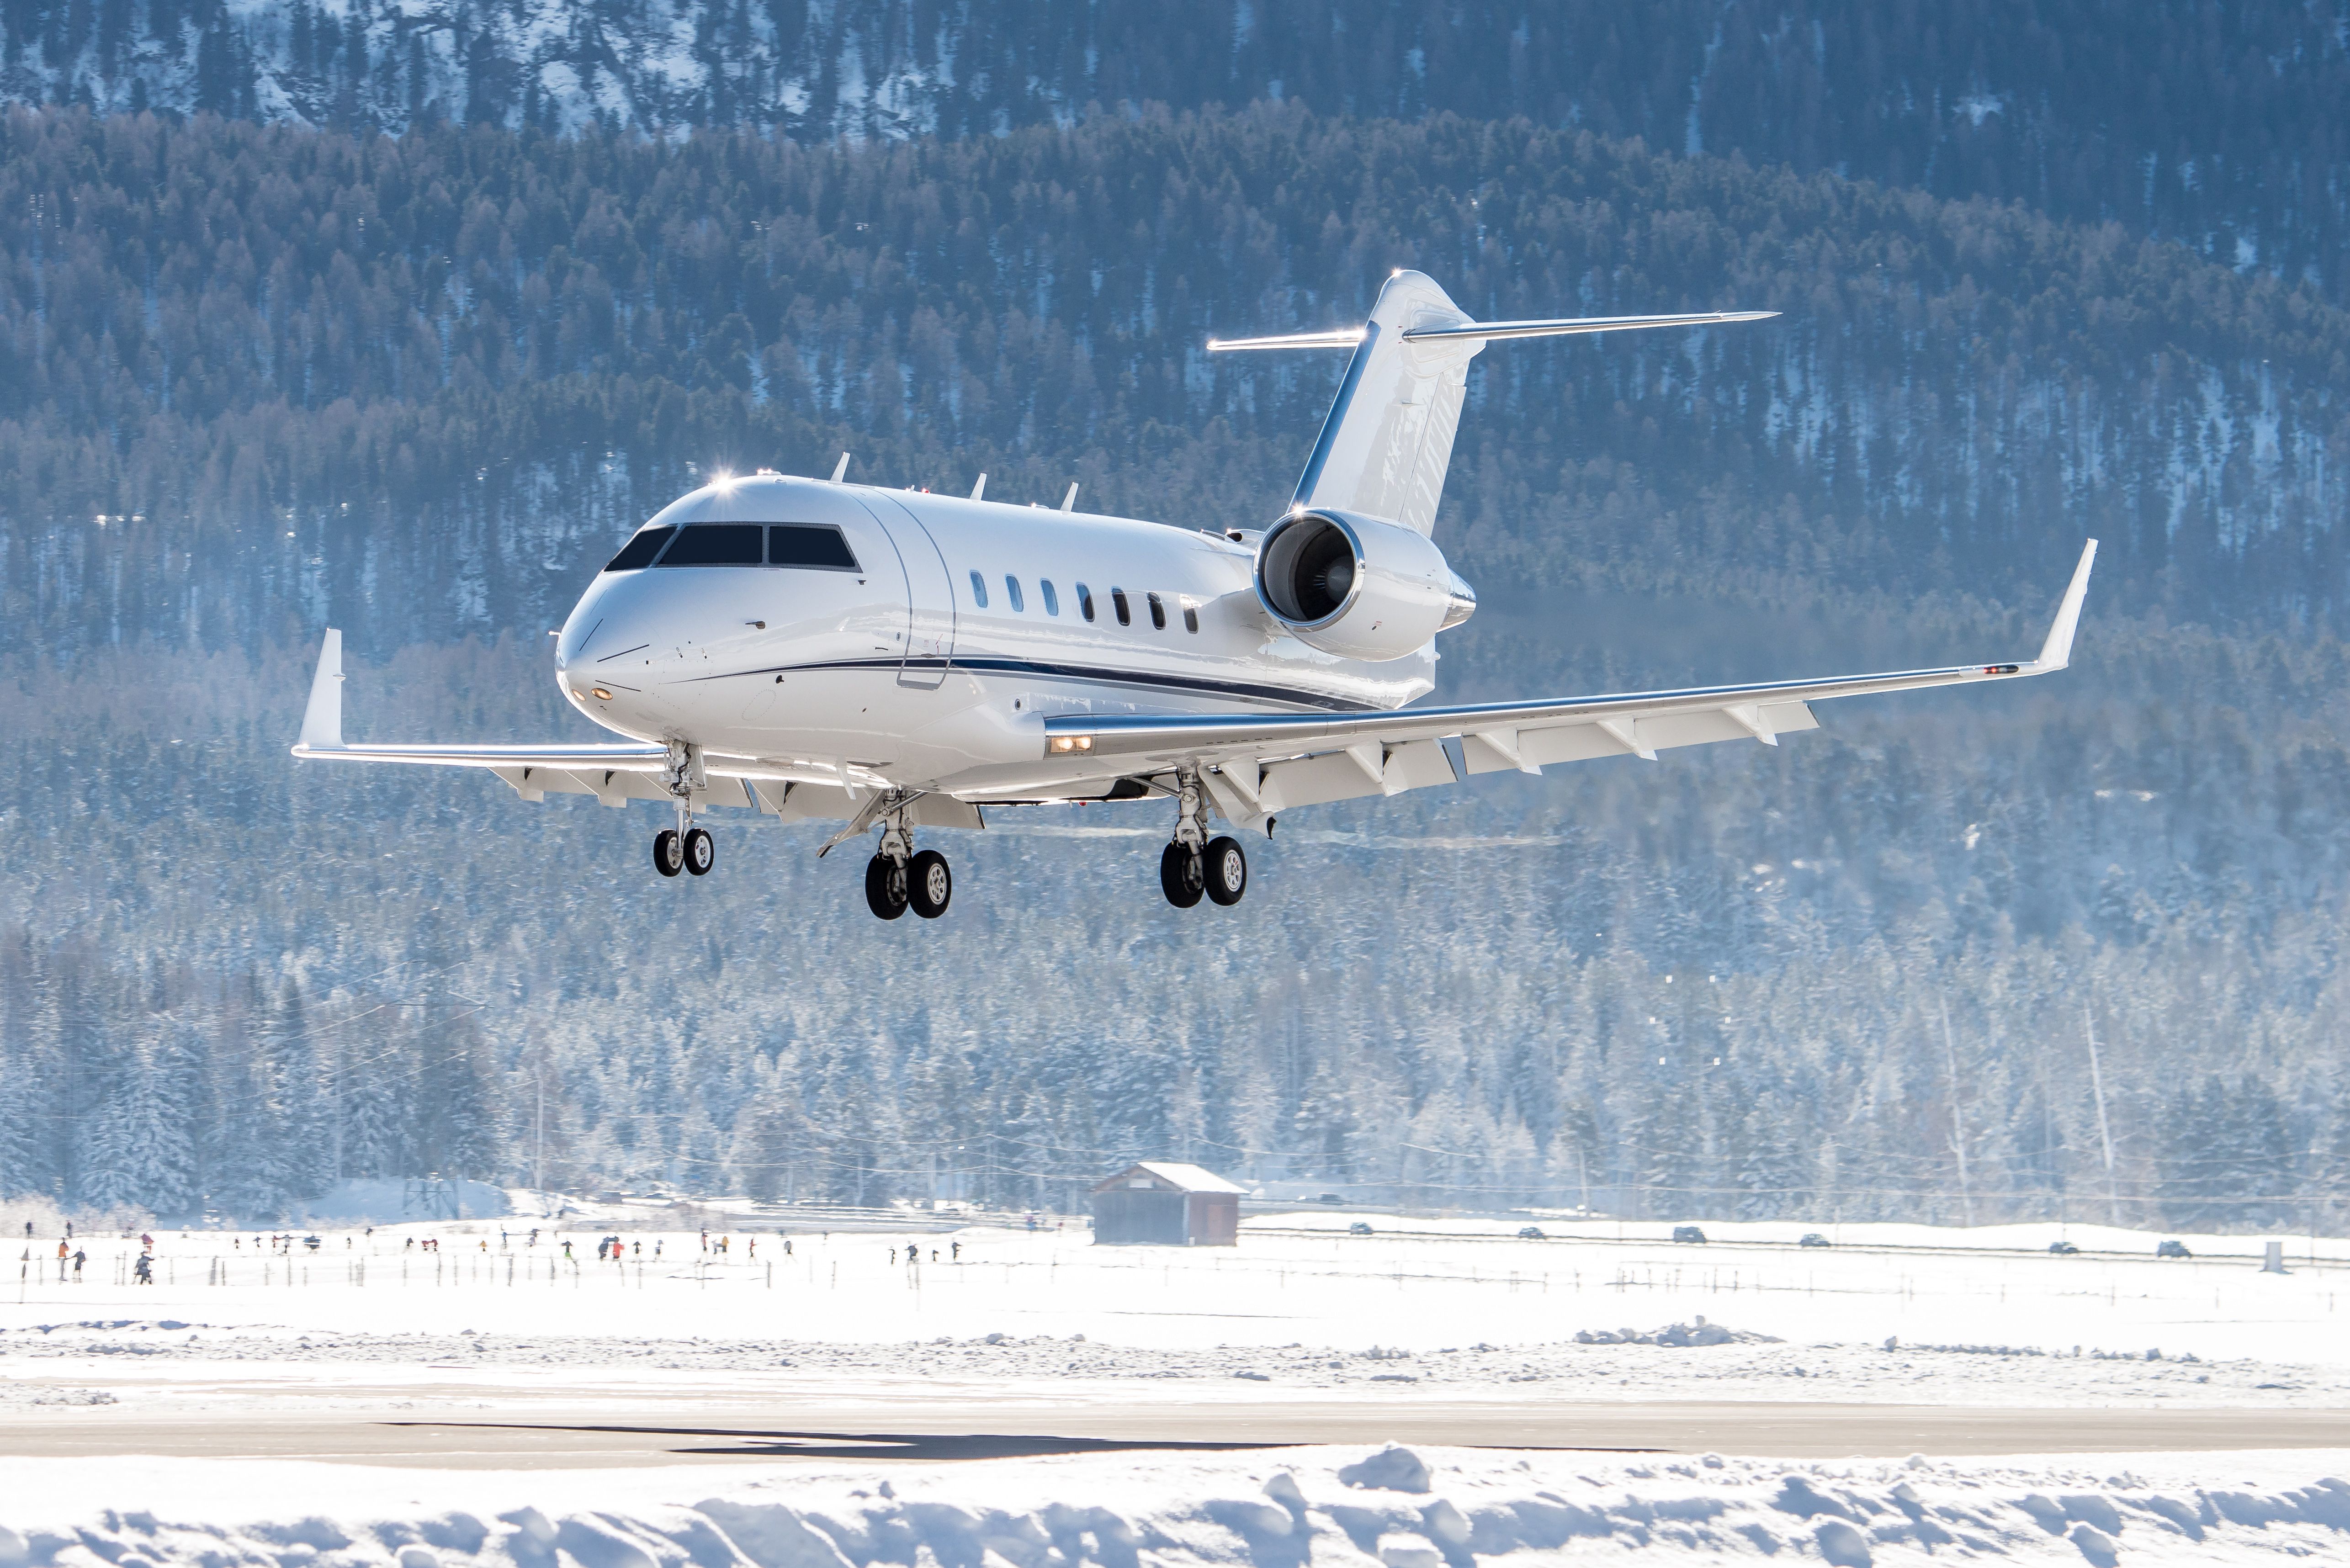 Luxury Business Jet lands at Samedan Airport, St Moritz